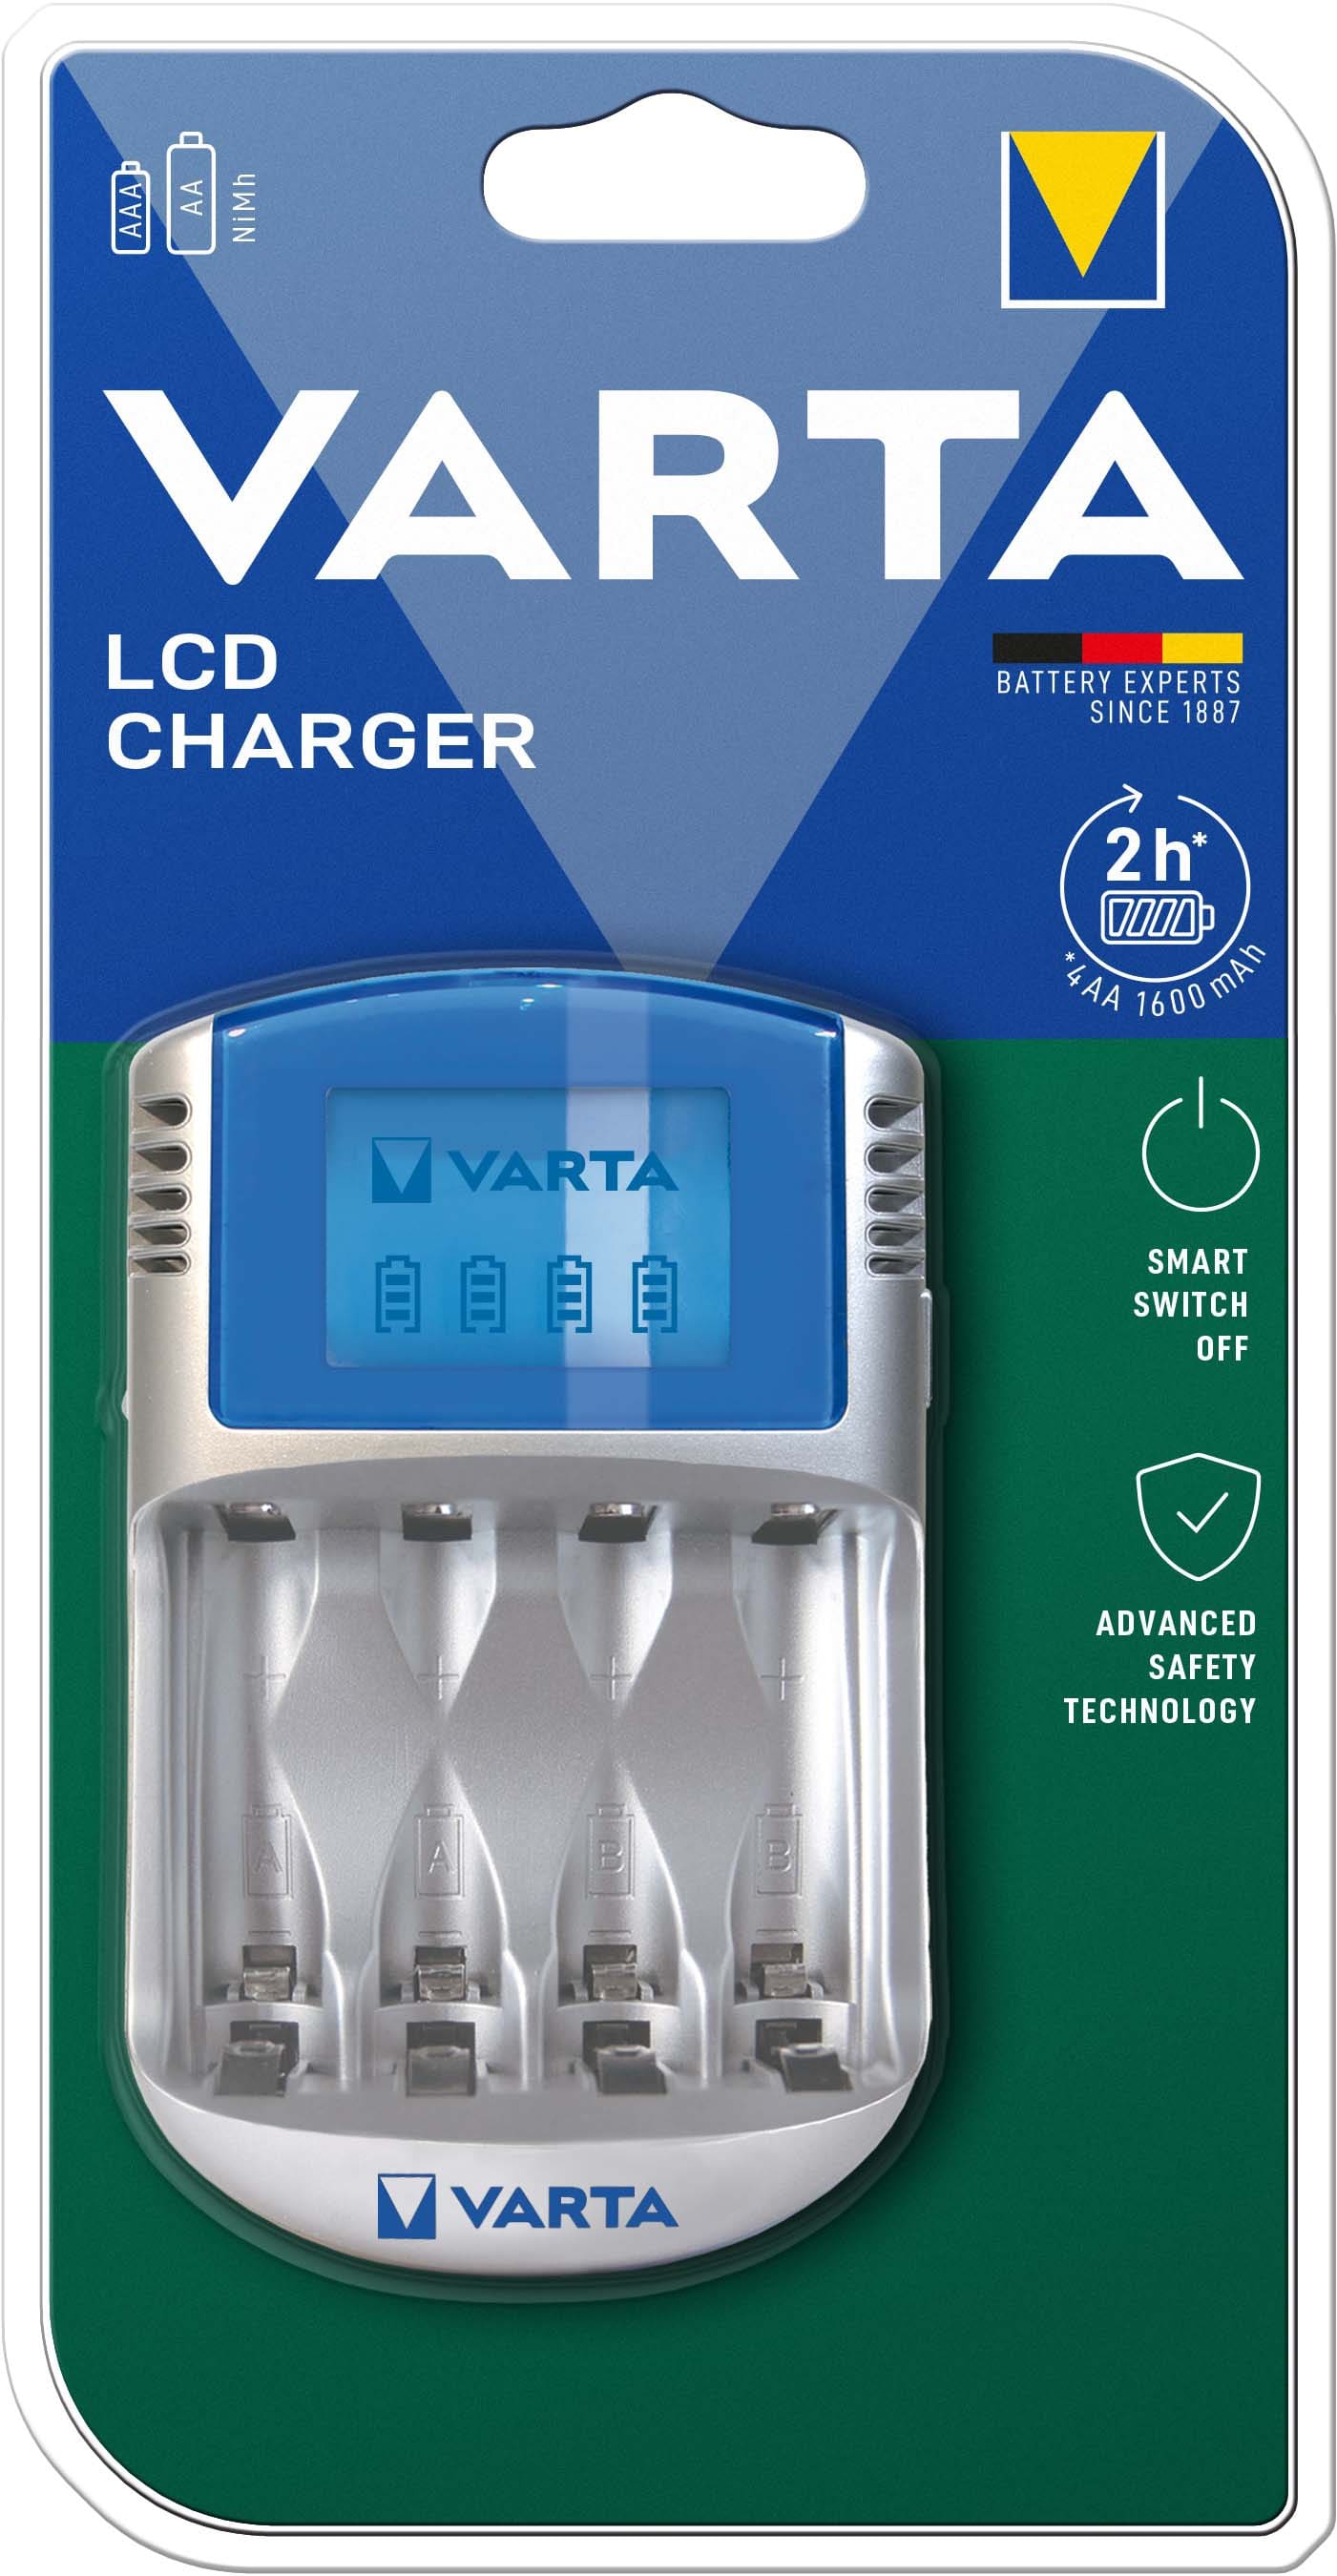 Varta 57070201401 LCD Charger inkl. 12V Adapter + USB Kabel